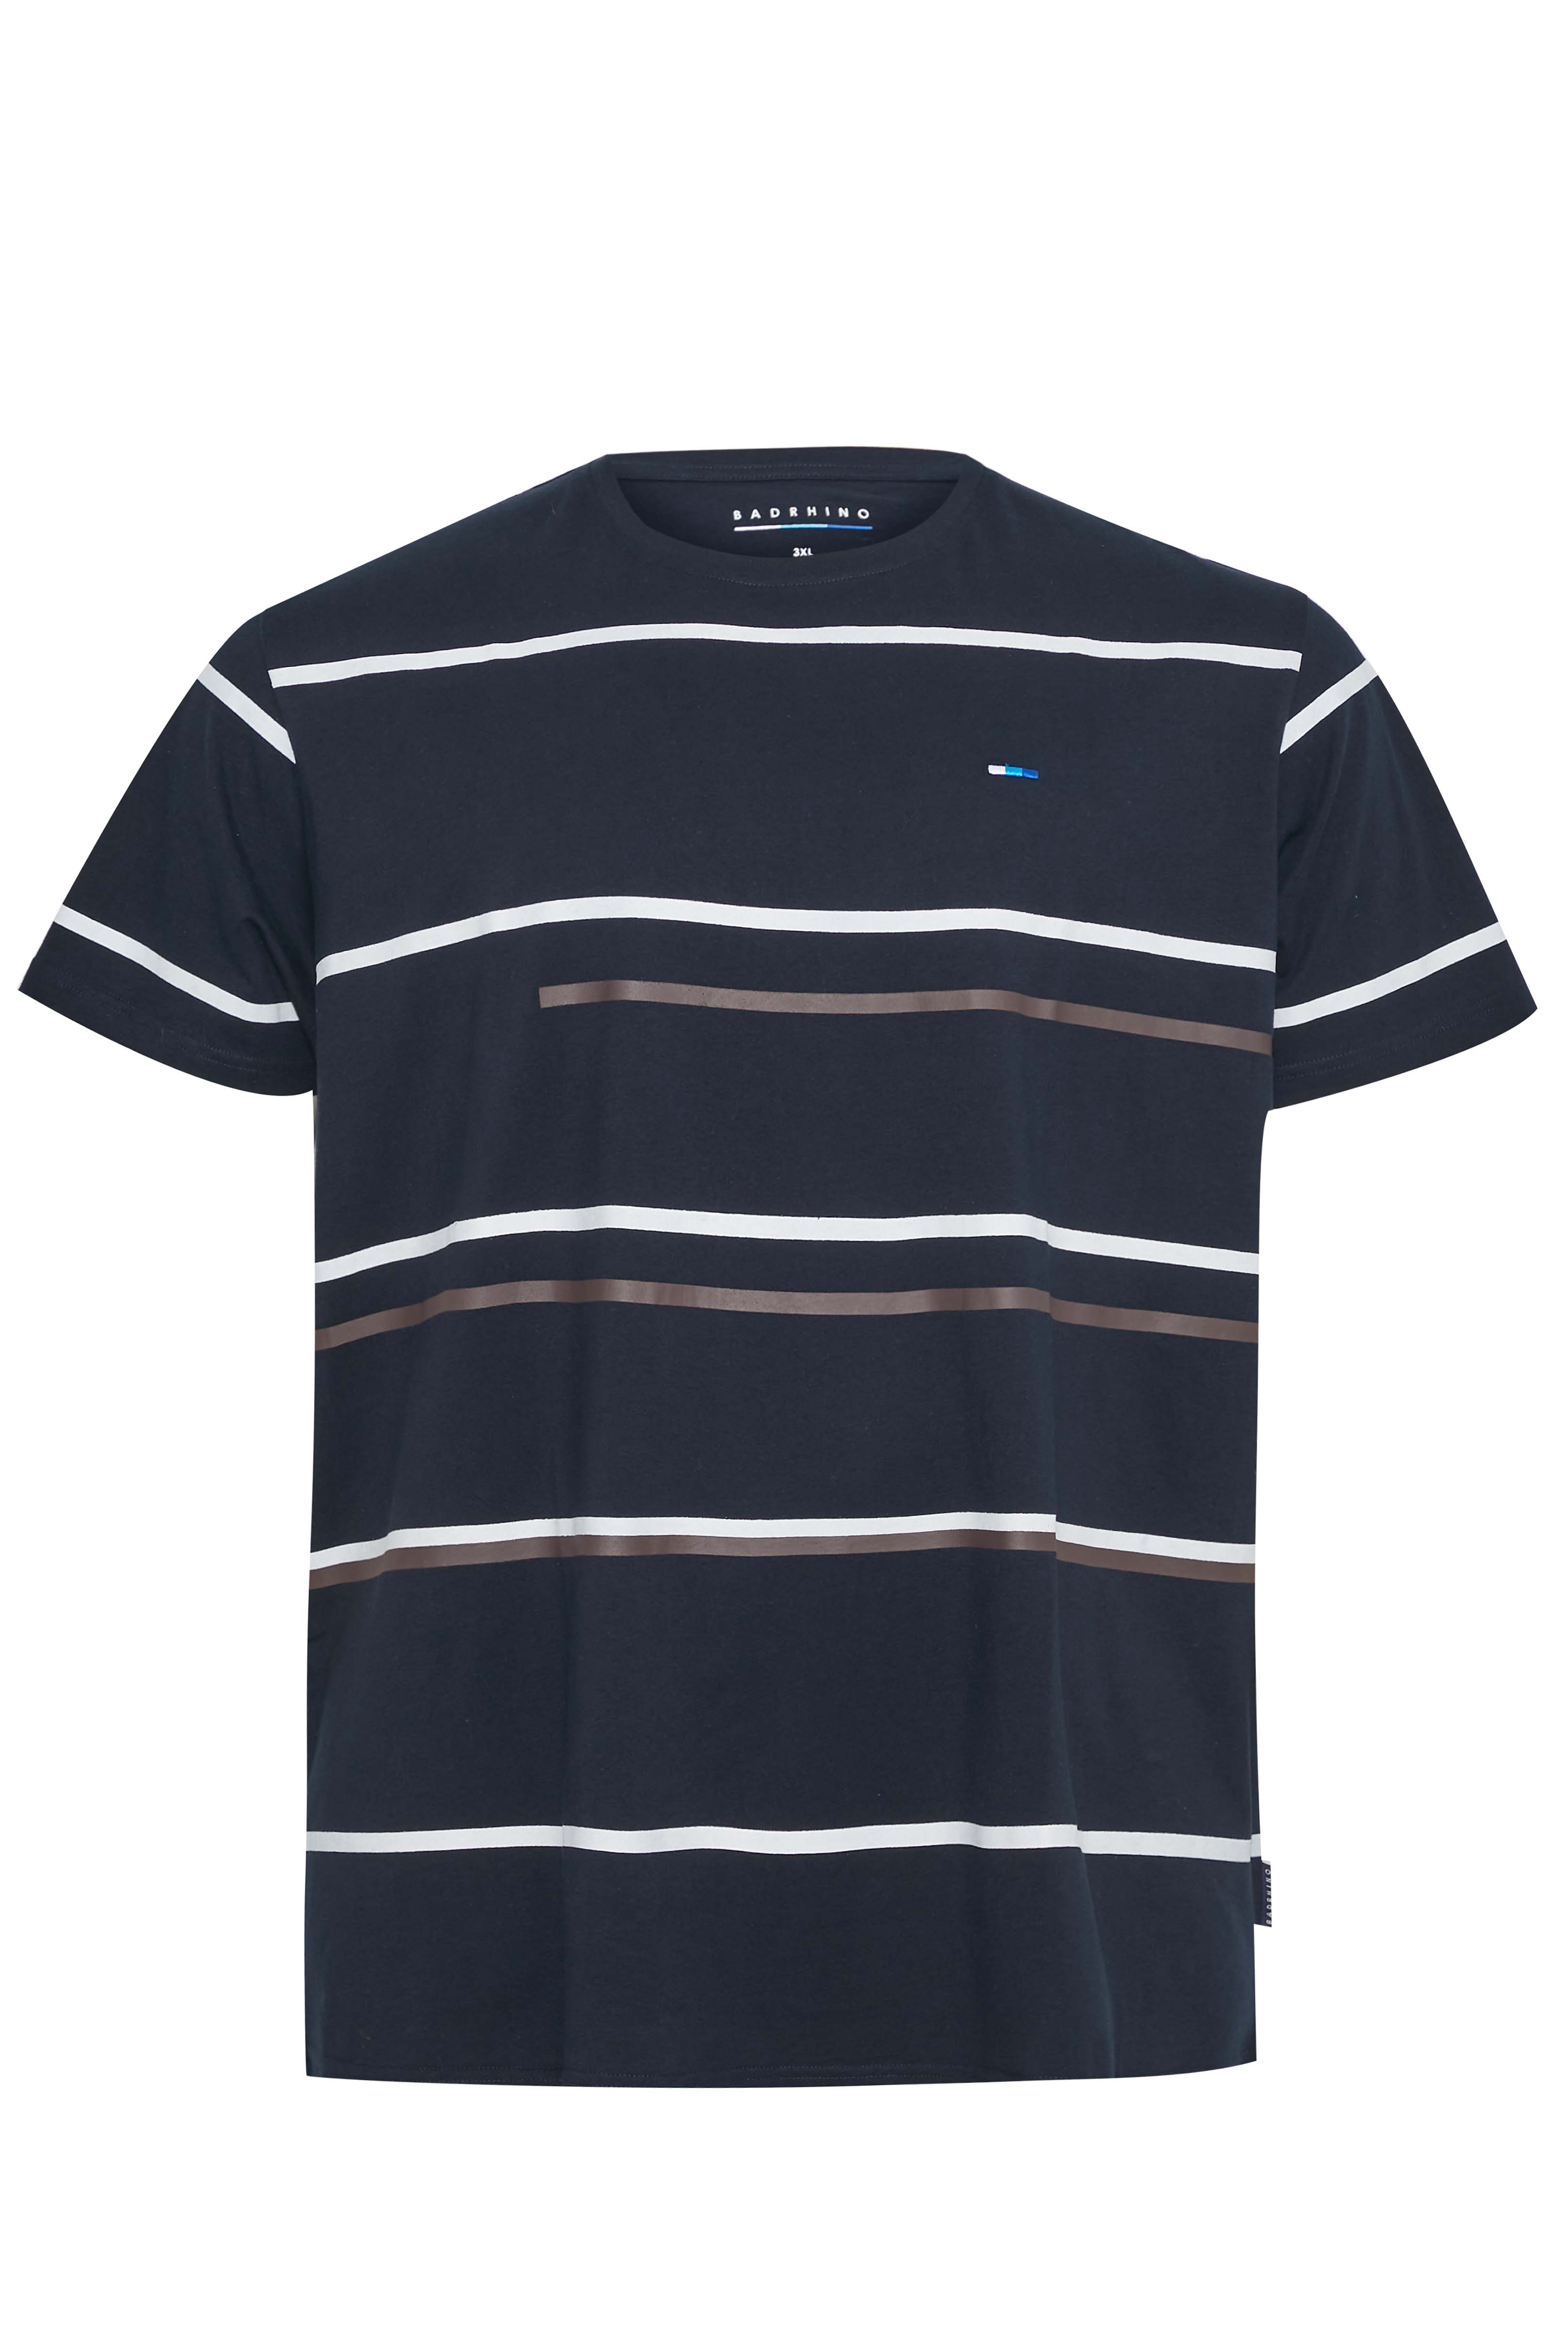 BadRhino Big & Tall Navy Blue Multi Stripe T-Shirt_X.jpg